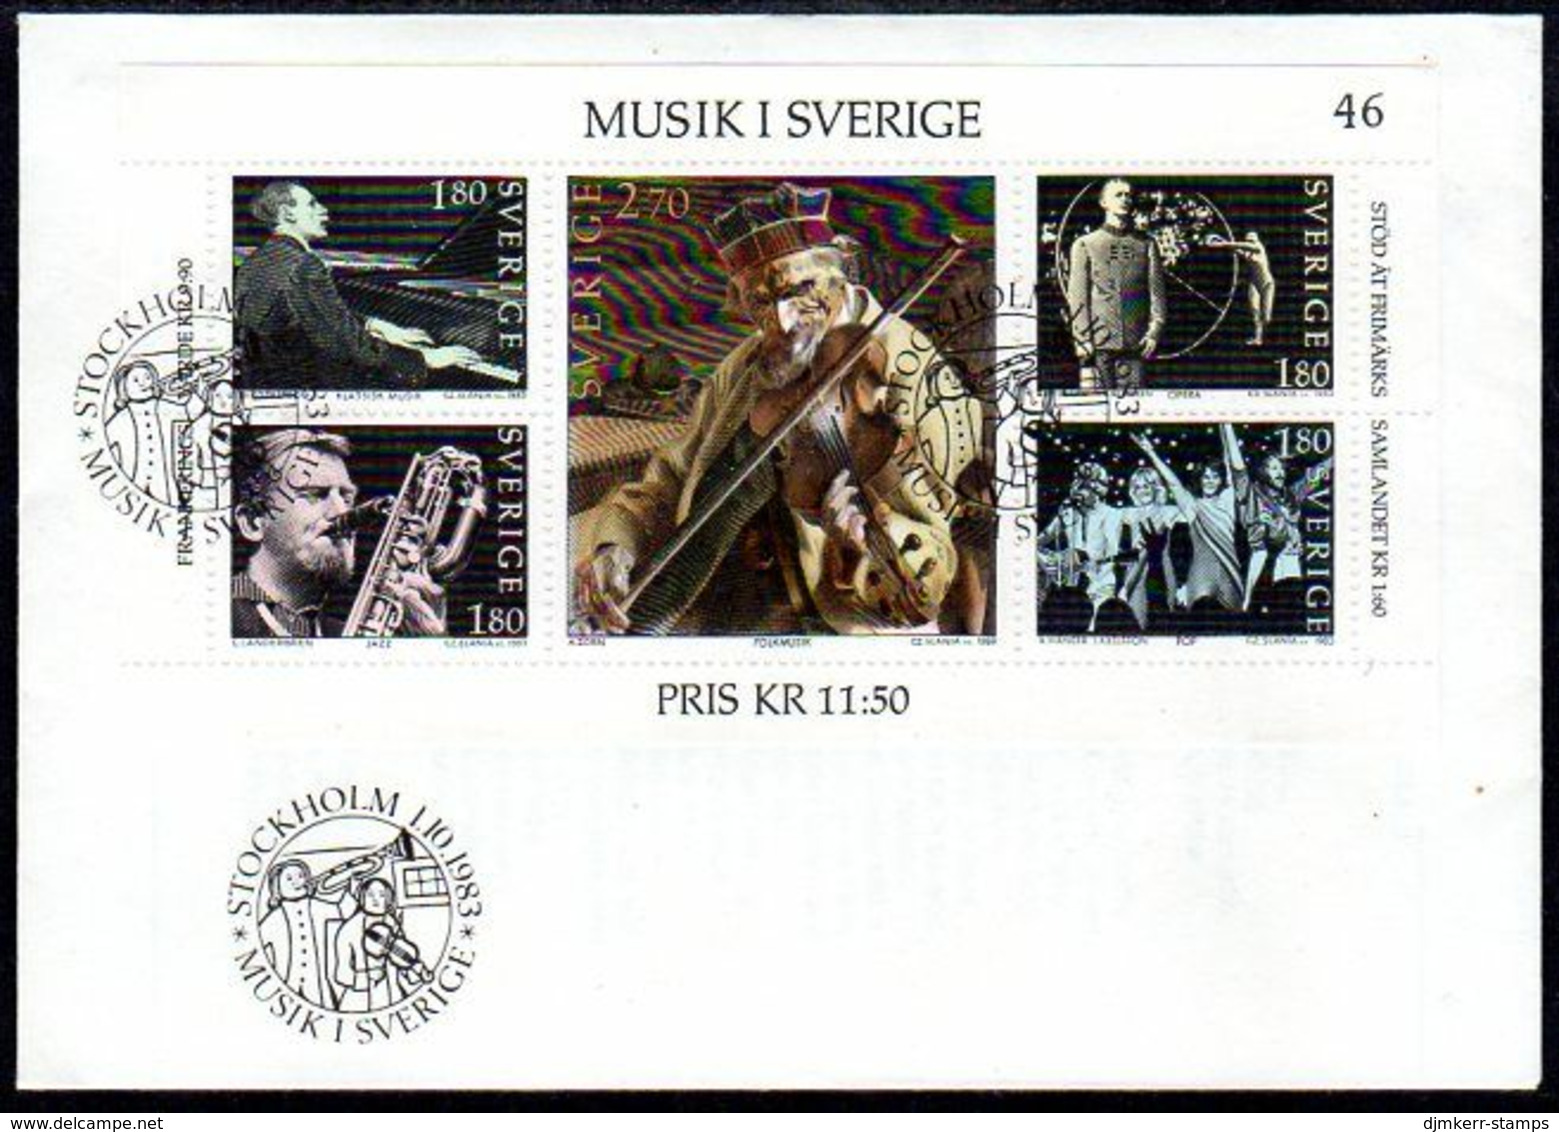 SWEDEN 1983 Music In Sweden FDC. Michel Block 11 - FDC